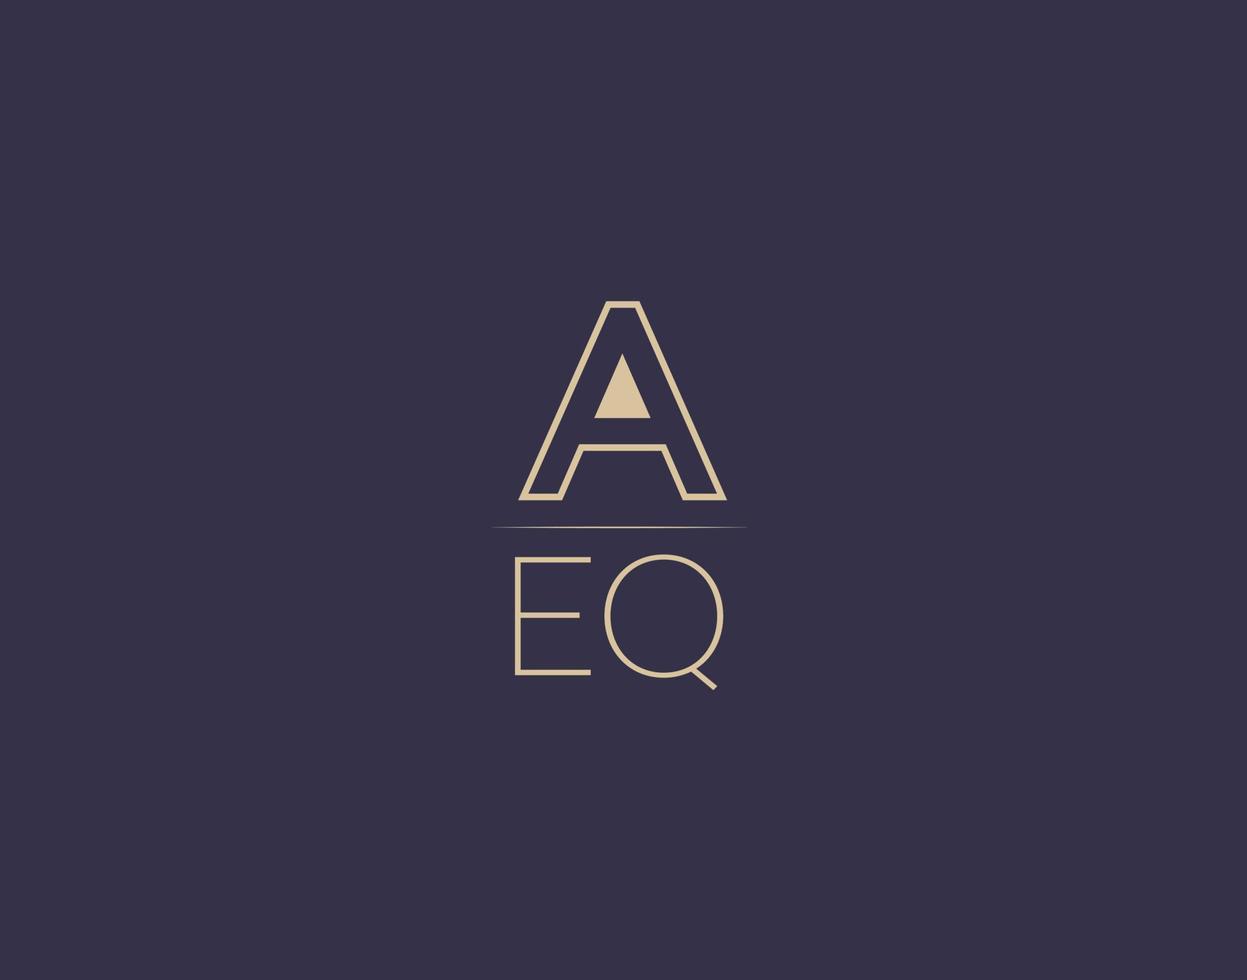 design de logotipo de carta aeq imagens vetoriais minimalistas modernas vetor